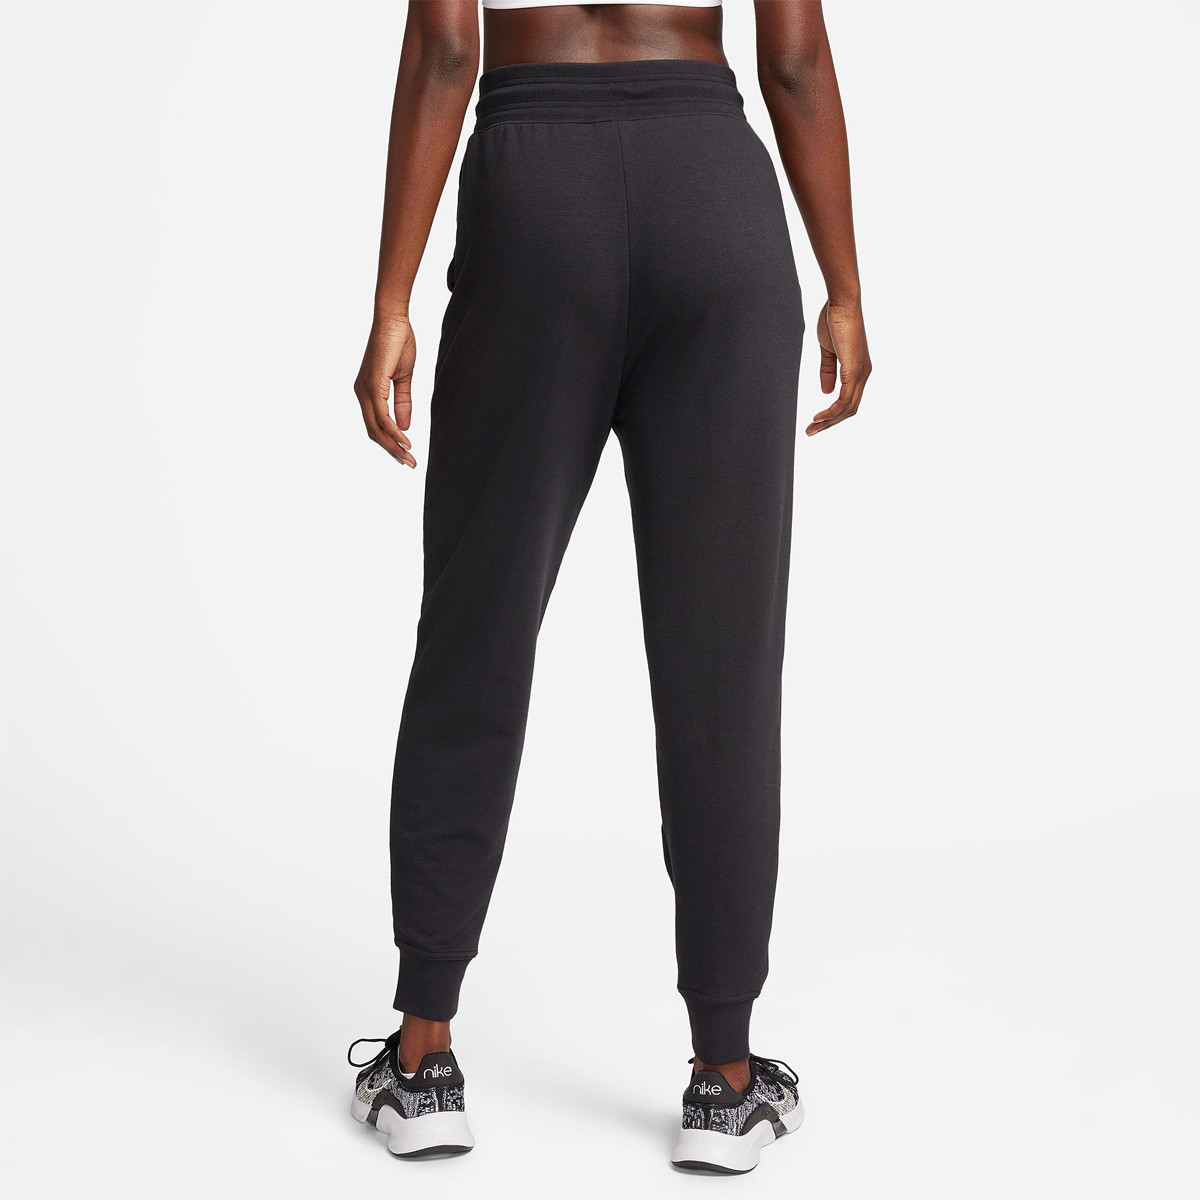 Nike Air Women's Tight Fit collant Leggings NWT